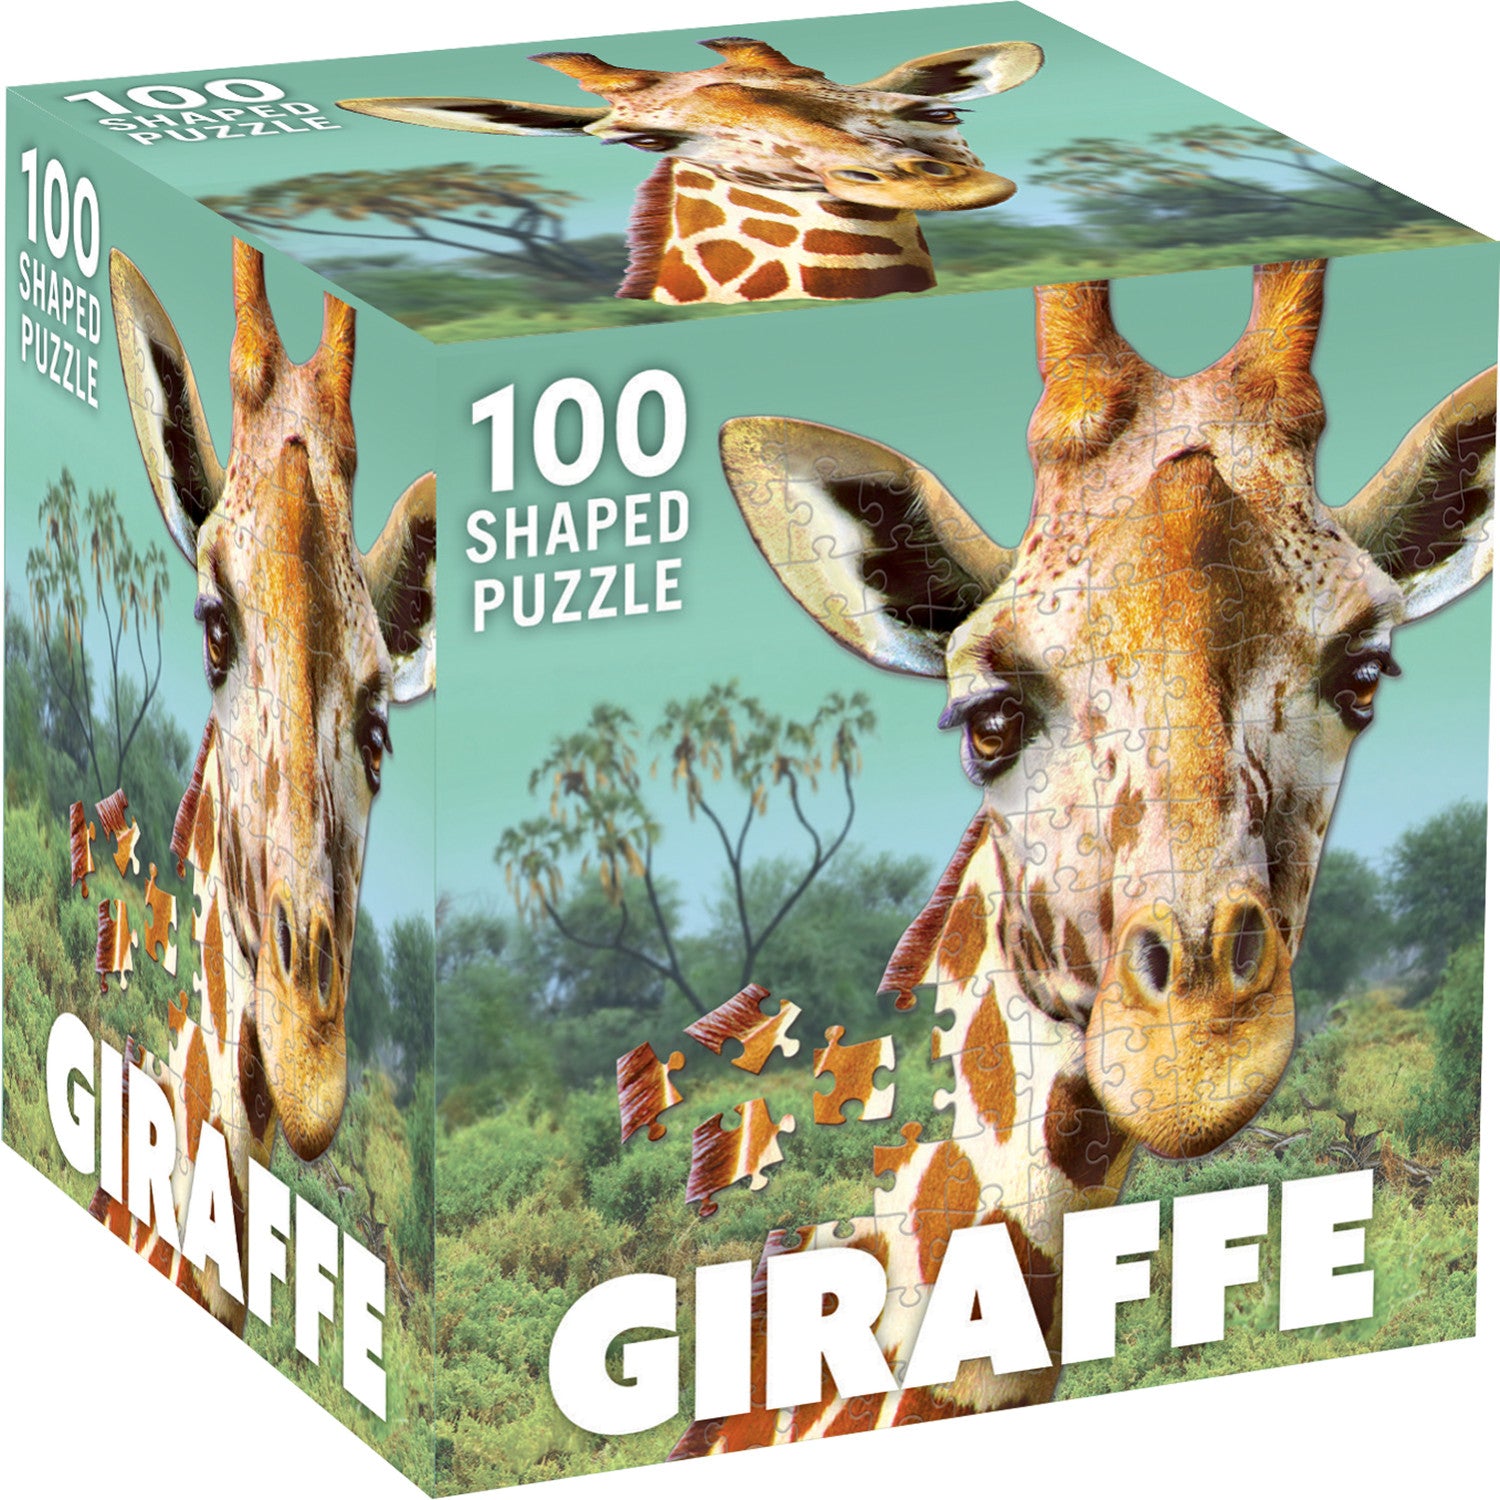 Giraffe 100 Piece Shaped Jigsaw Puzzle